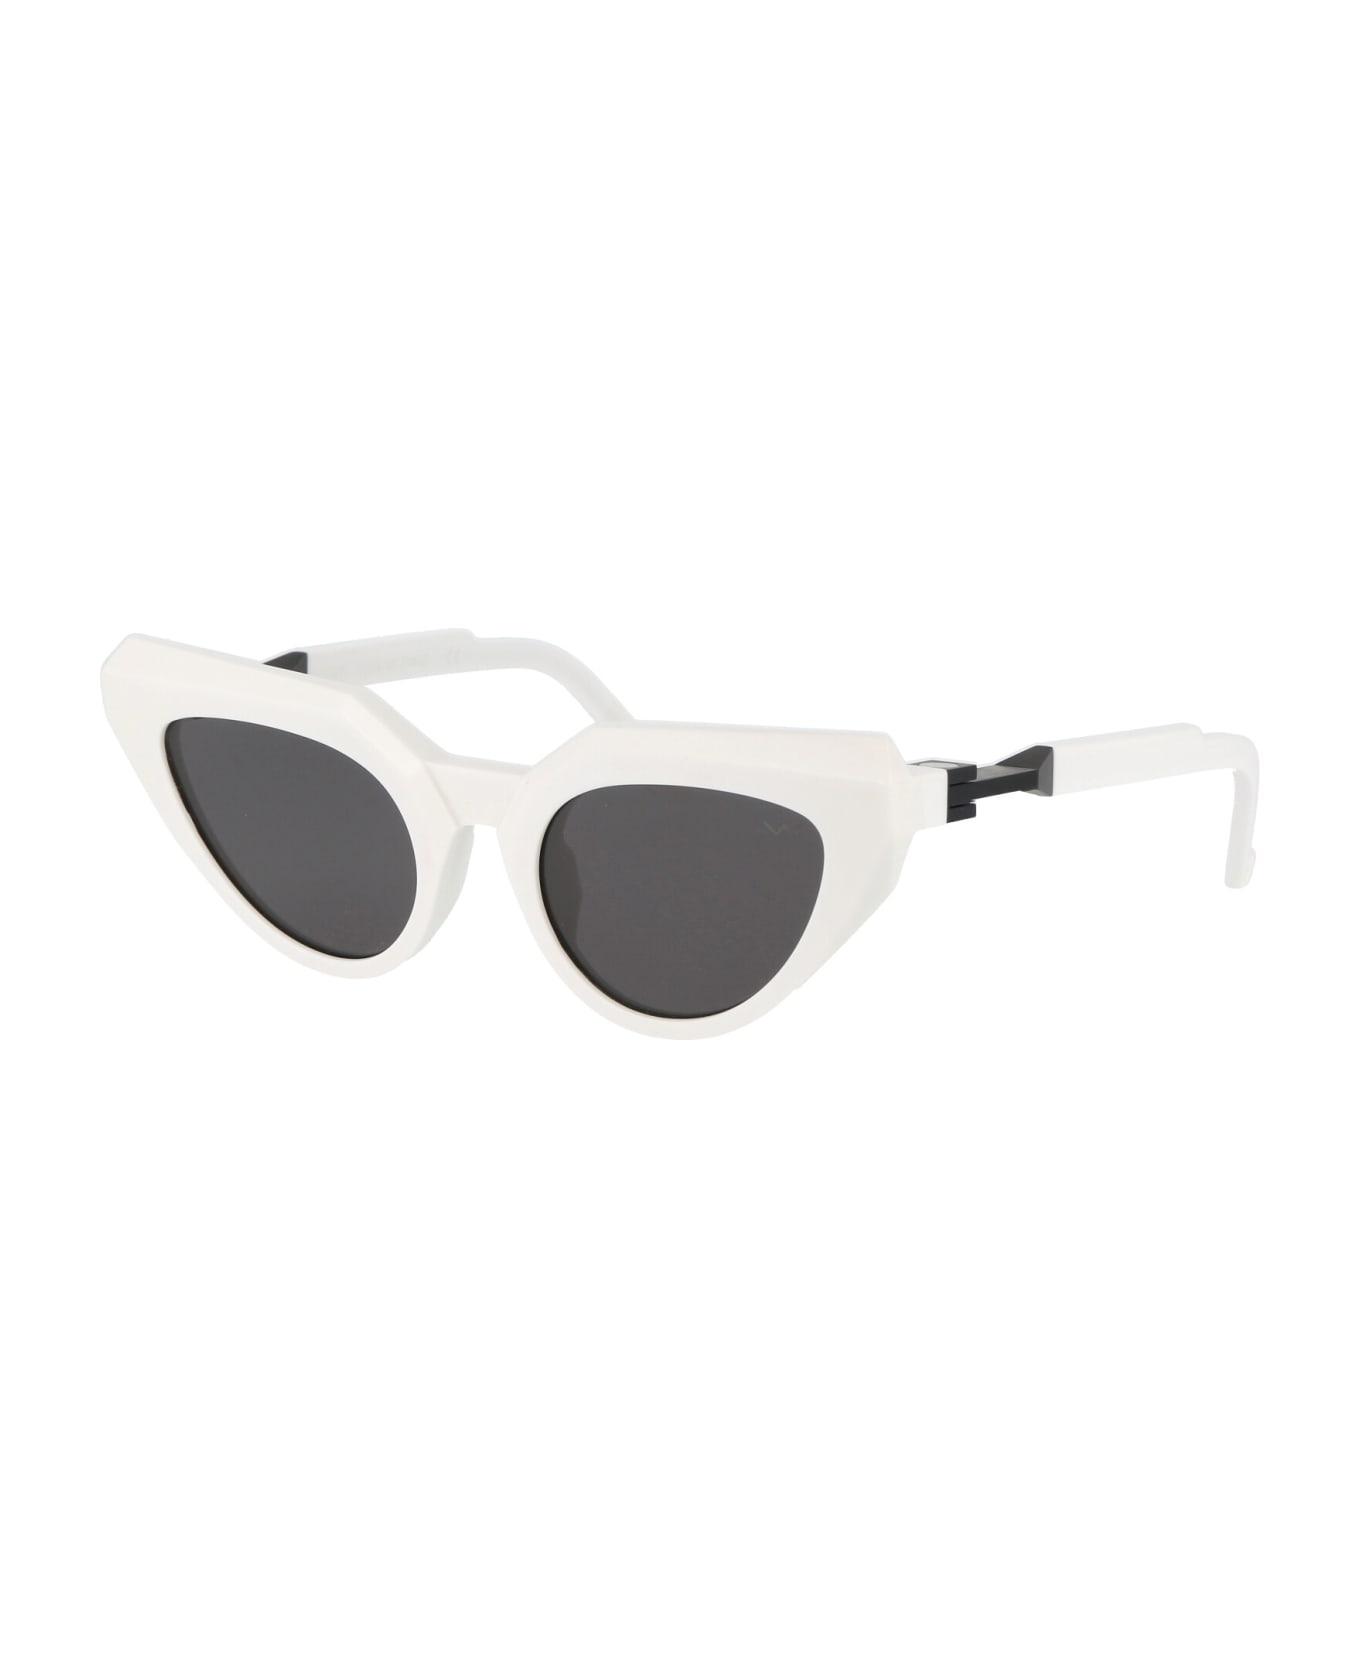 VAVA Bl0028 Sunglasses - WHITE|BLACK FLEX HINGES|BLACK LENSES